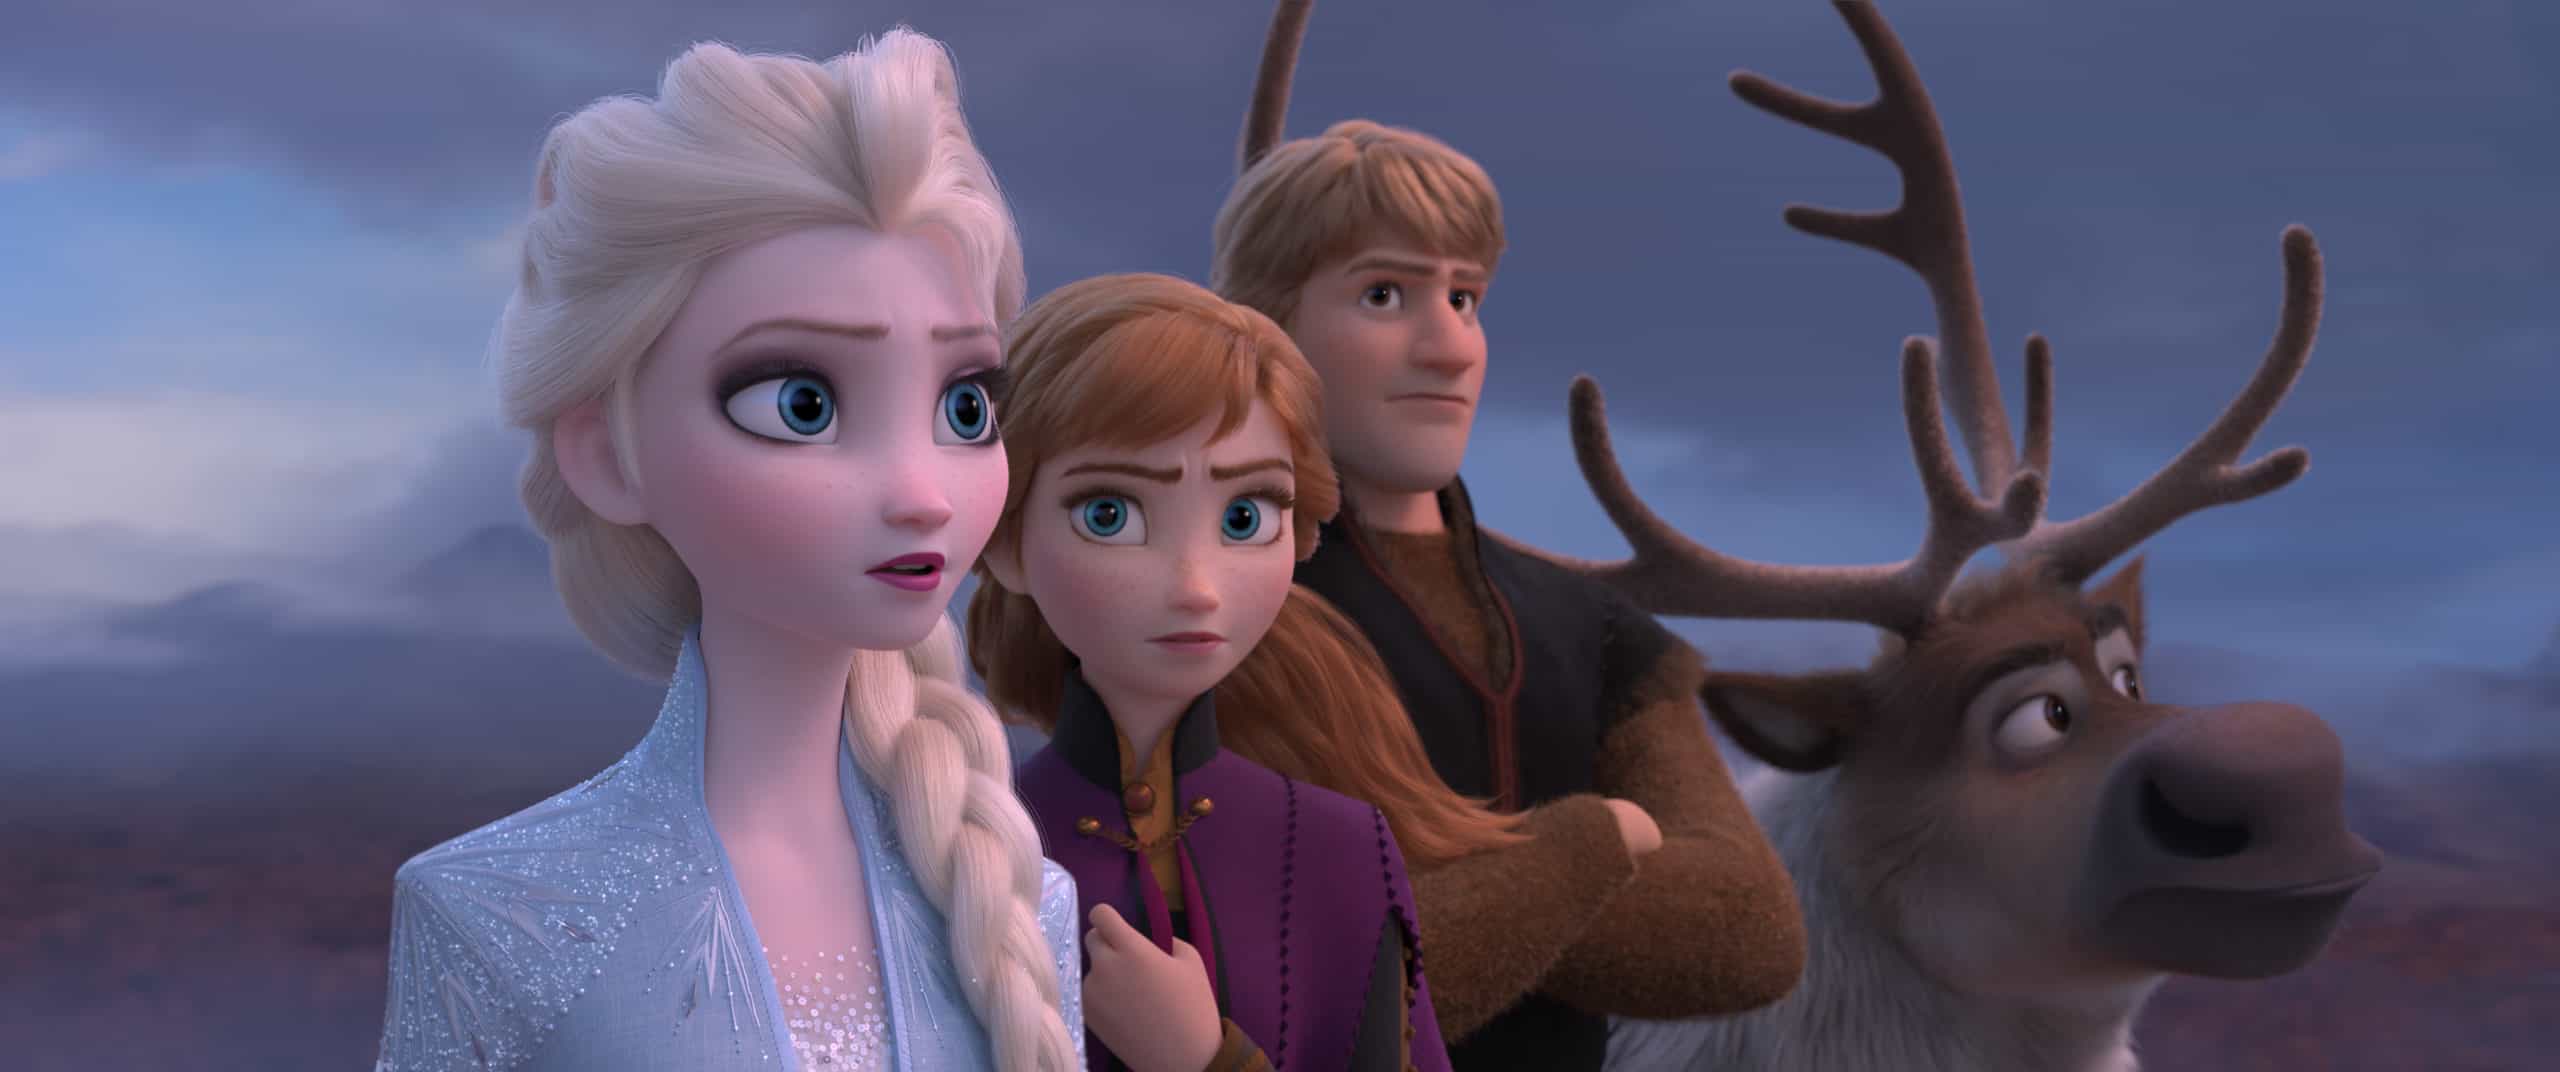 Elsa Anna and Kristoff from Disney Frozen 2